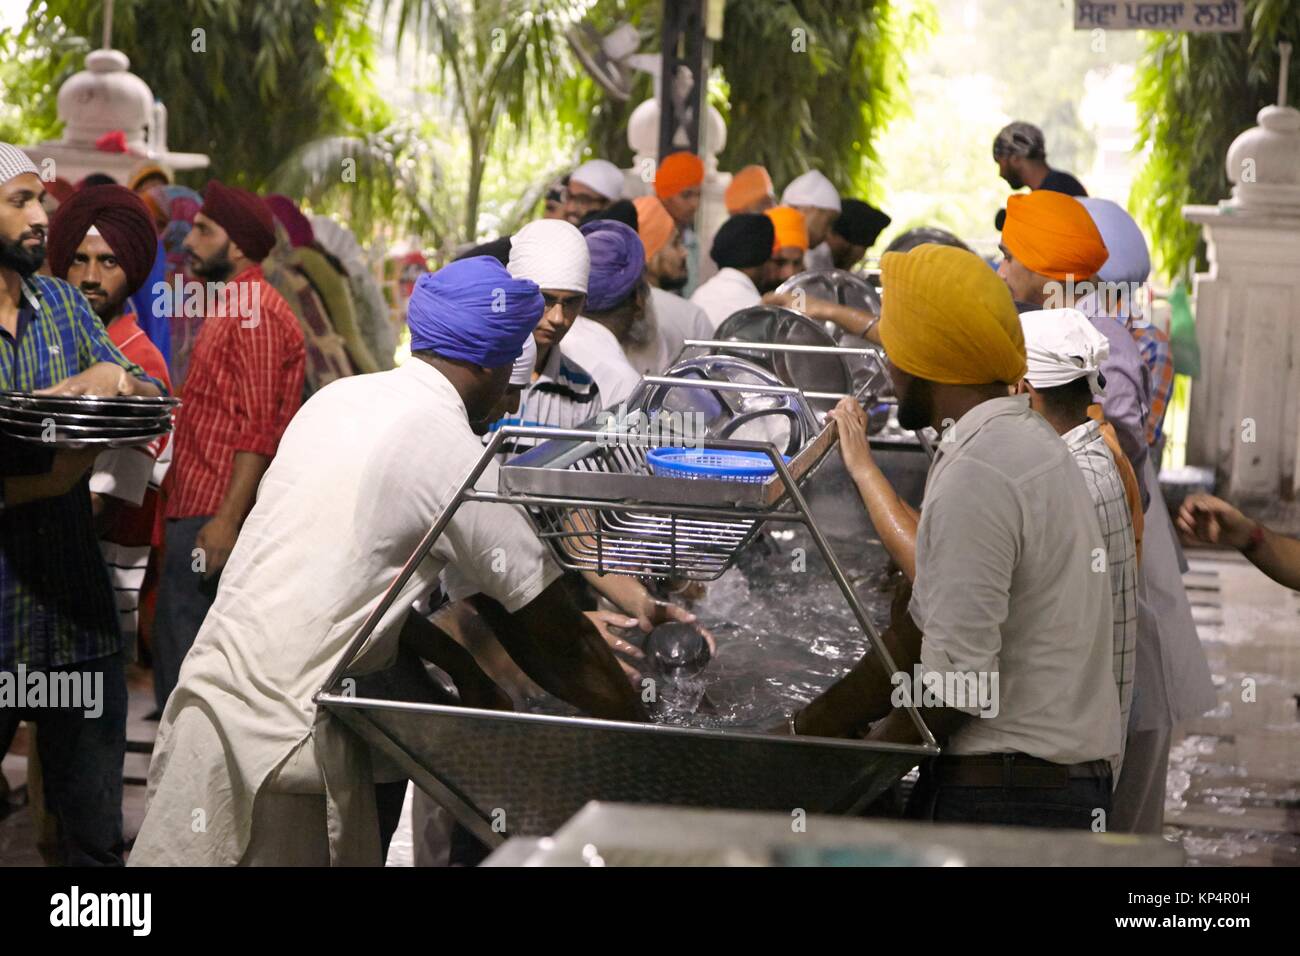 Men cleaning eating utensils. Dining Hall, Harmandir Sahib, Golden Temple, Amritsar, Punyab, India. Stock Photo